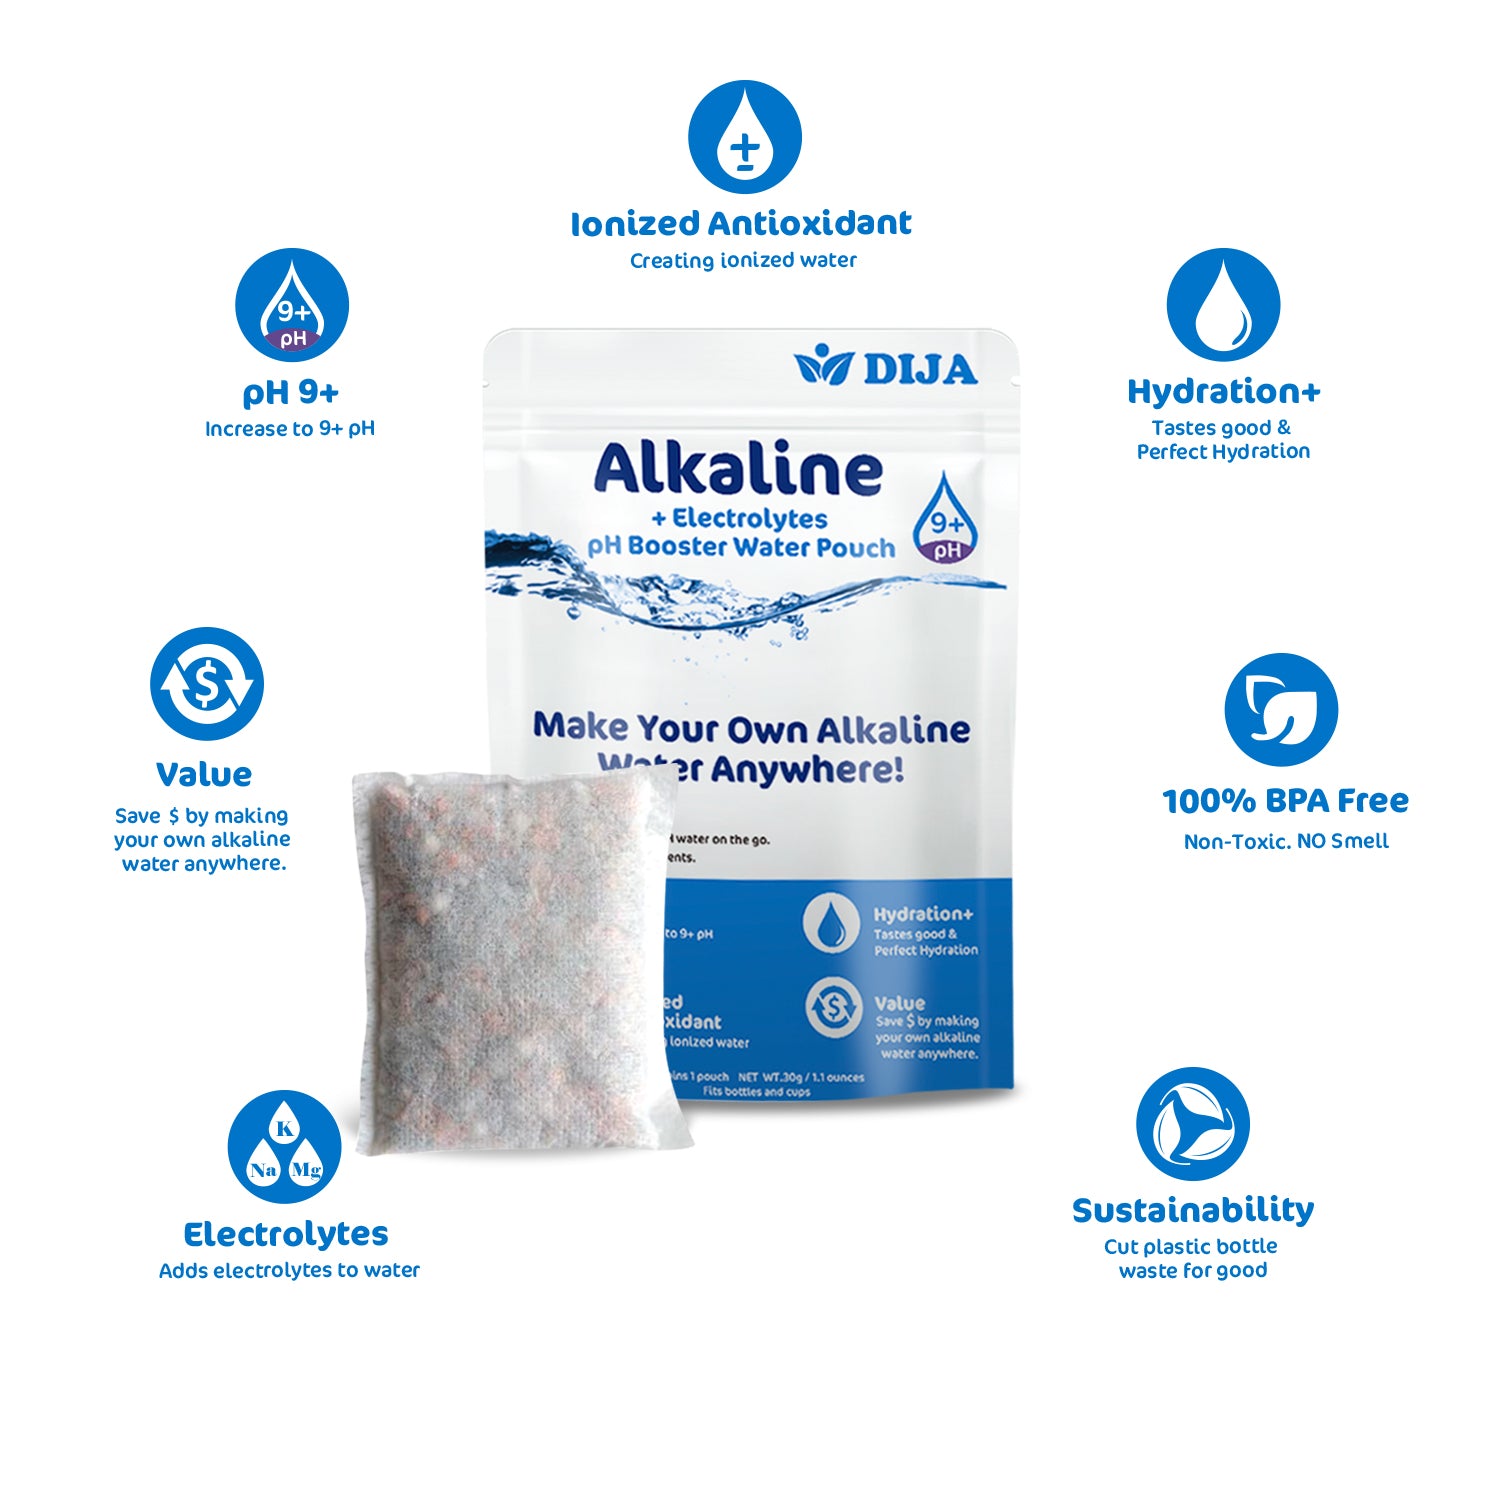 DIJA Alkaline Insulated Water Bottle Includes Filter Improve PH 9+, Ke